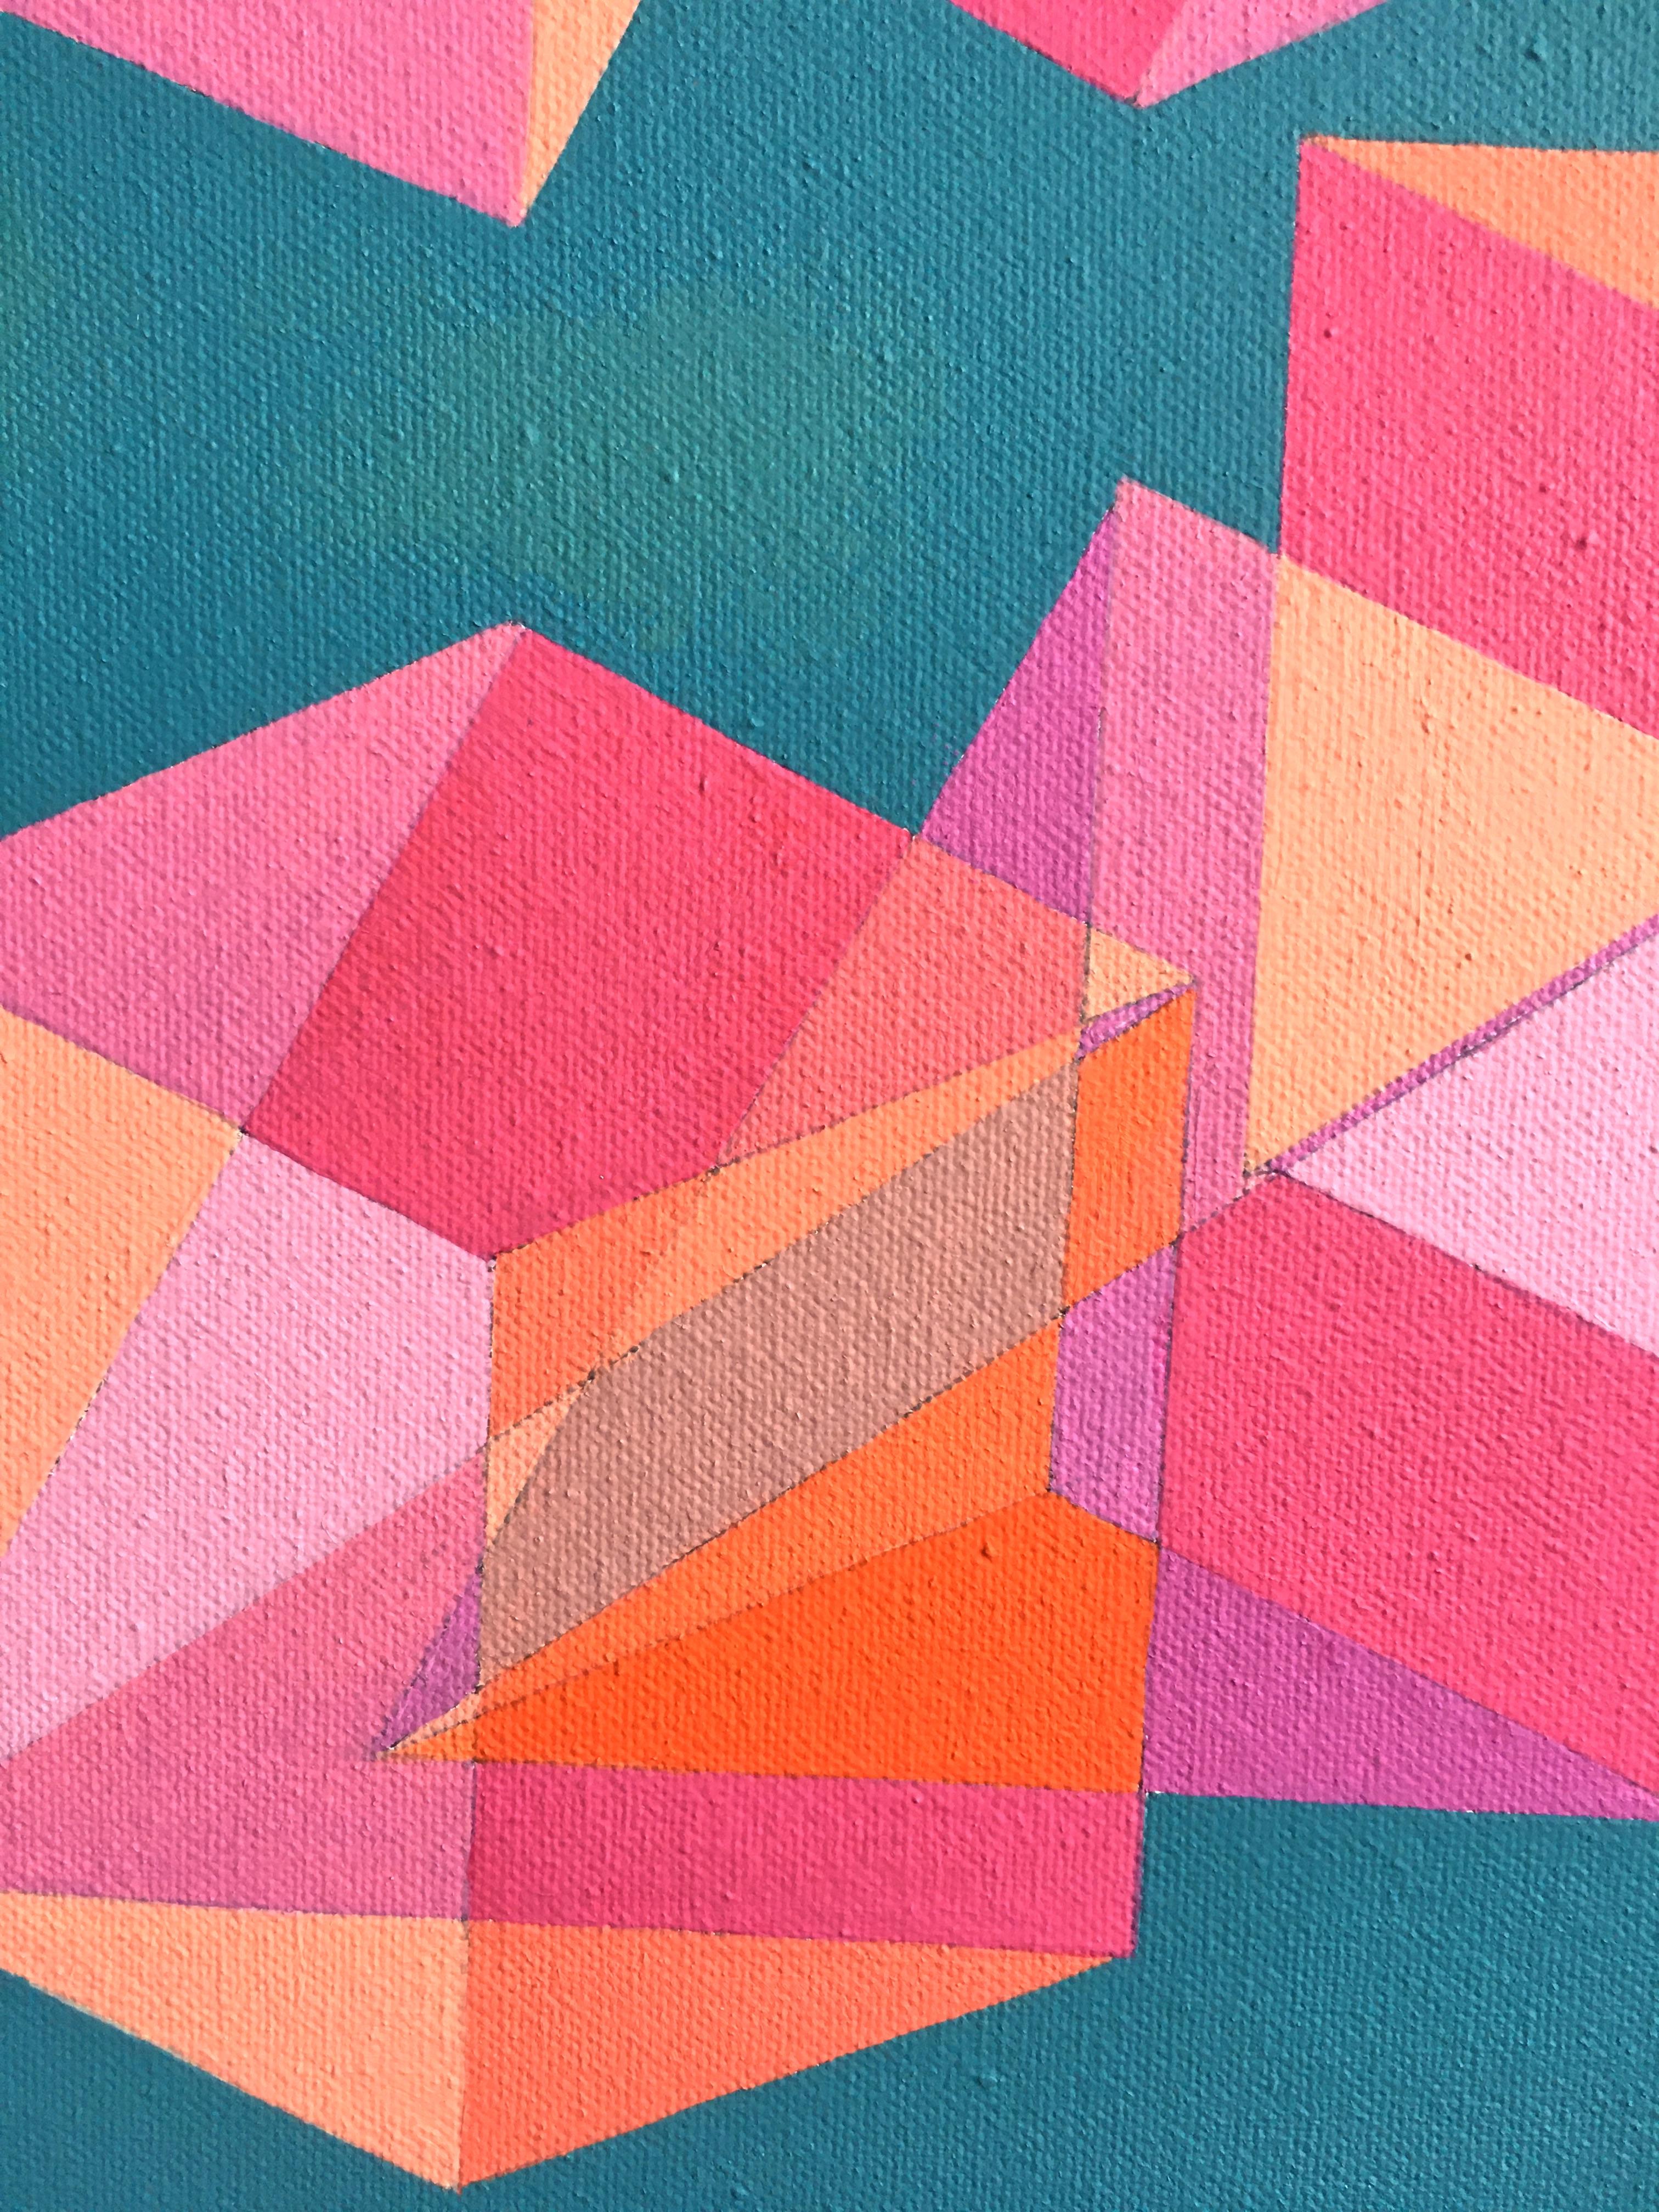 Cubes Divided Equally into Three #7: geometrisches abstraktes Gemälde w / Blau & Rosa – Painting von Benjamin Weaver